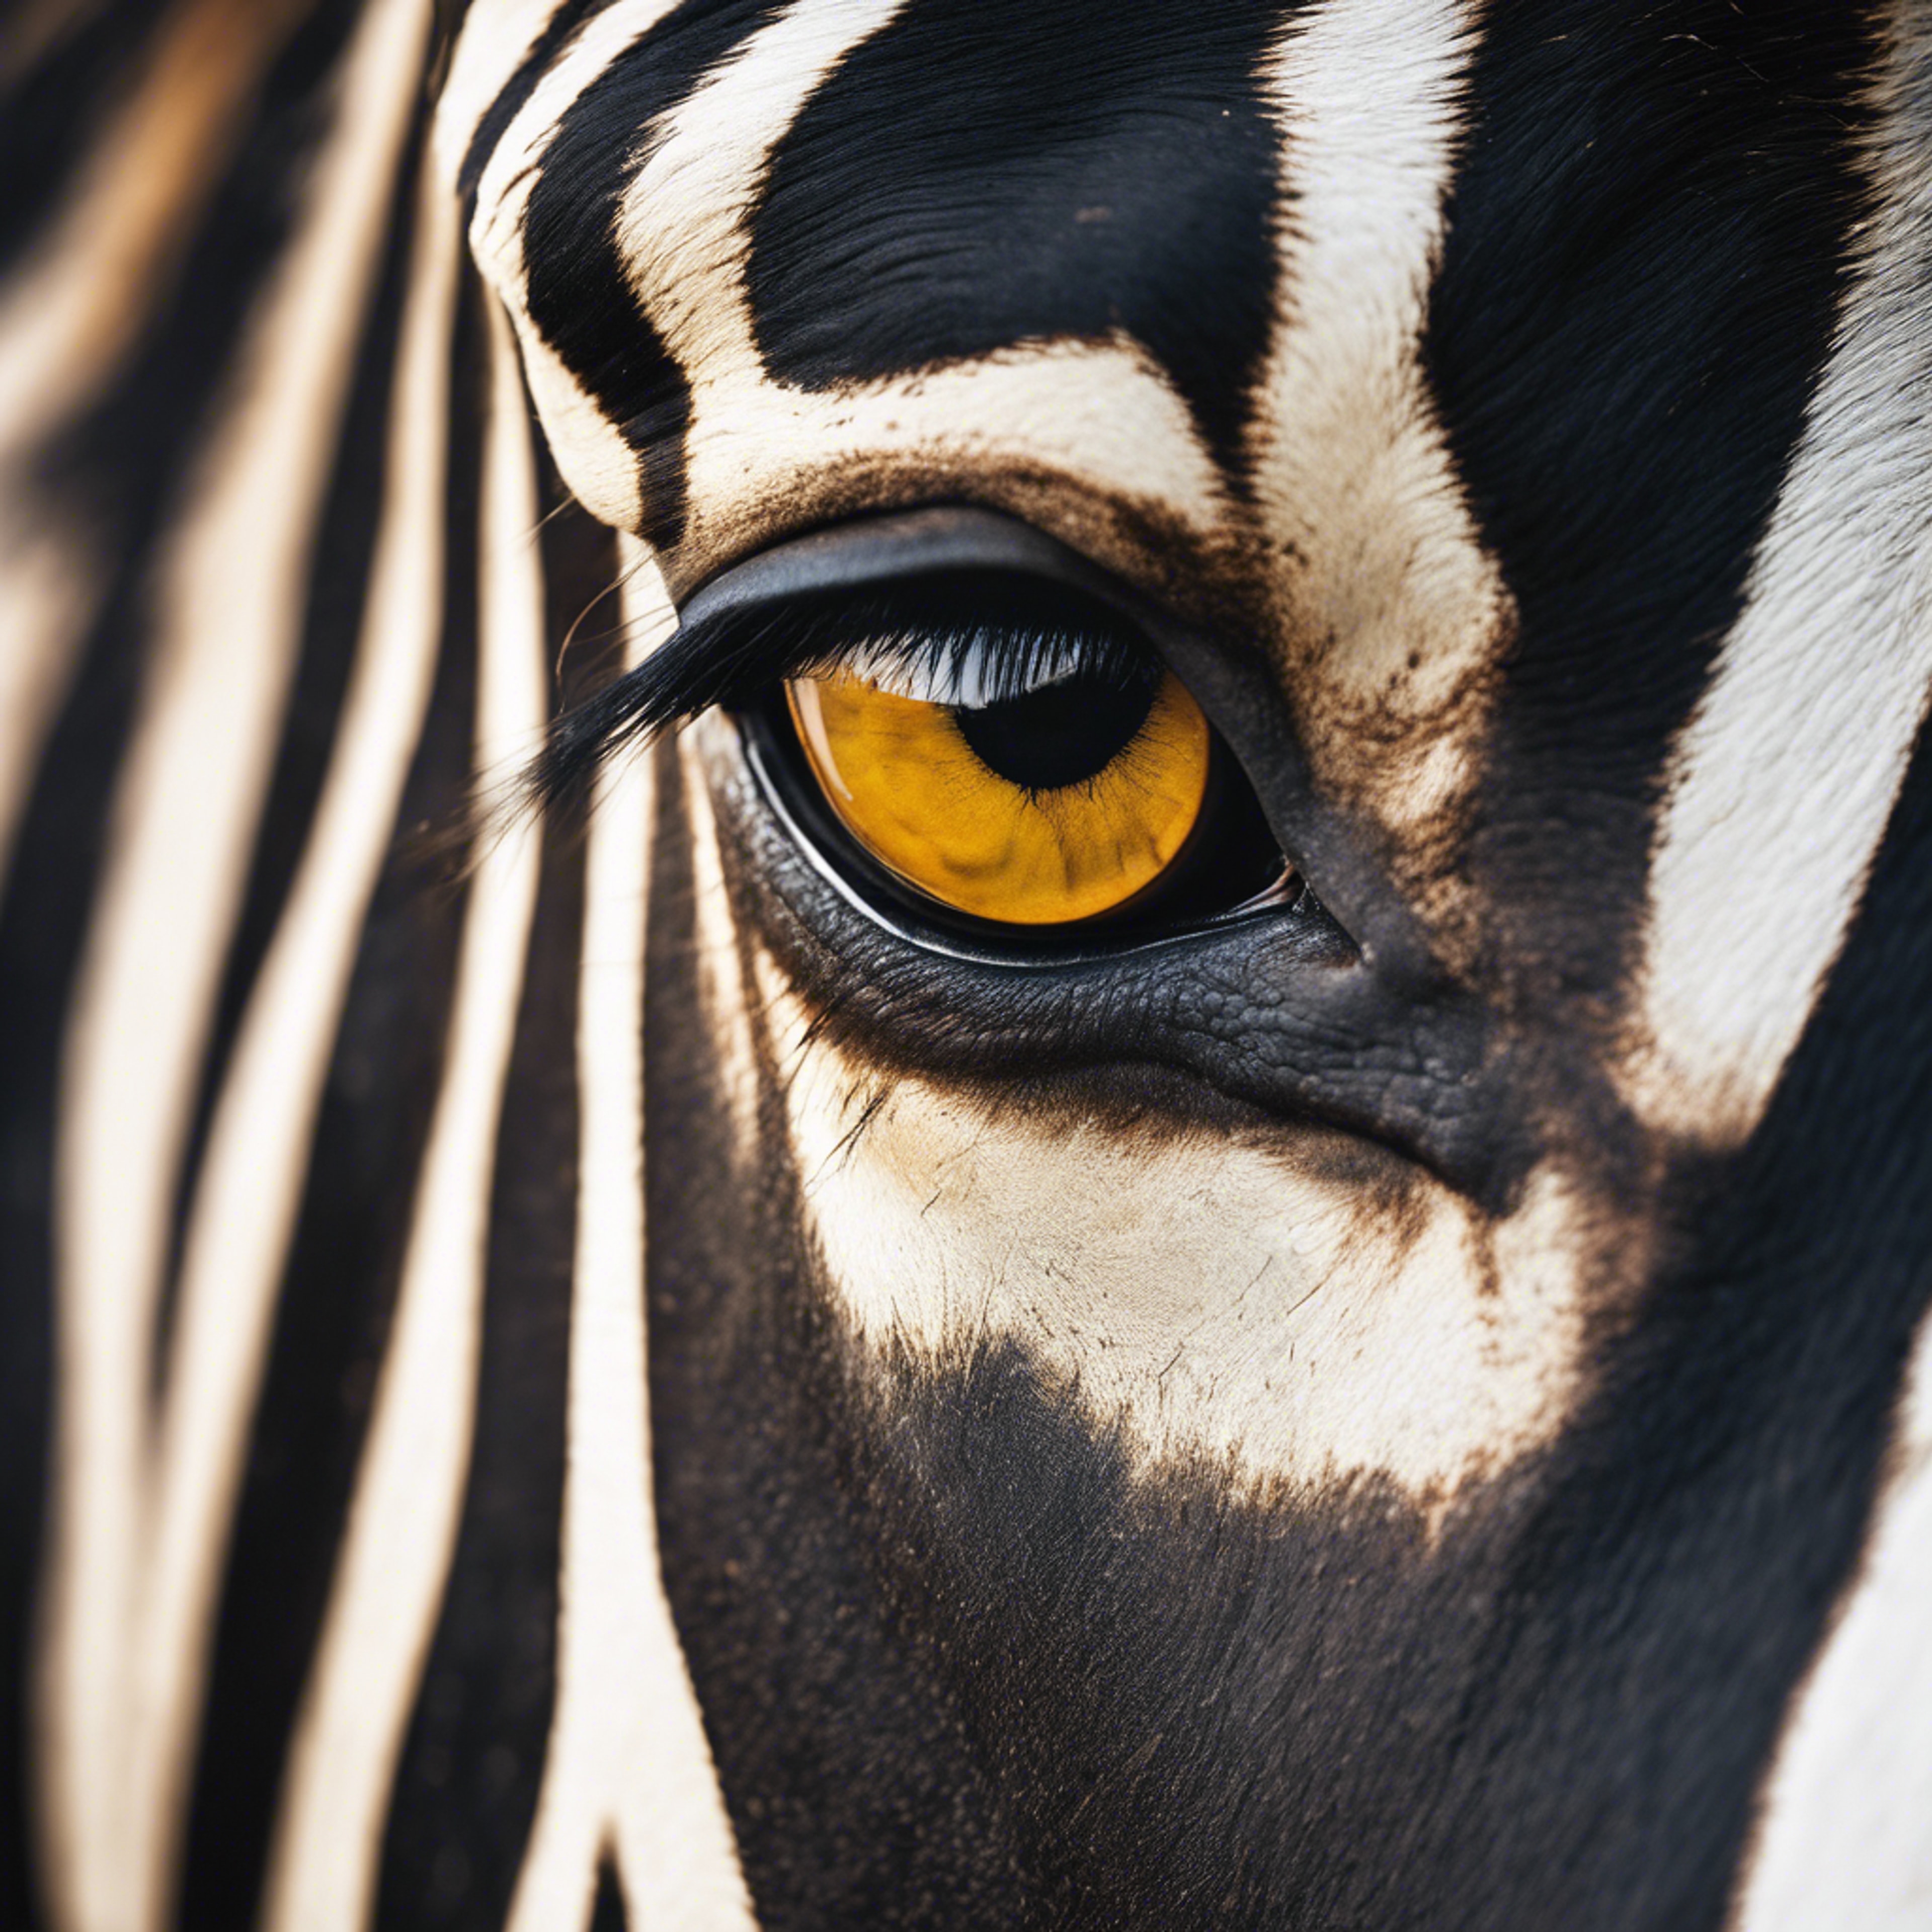 A closeup of a zebra's eye, showcasing its beautiful black and yellow striped pattern. Шпалери[50ee4a2668b0446d82c3]